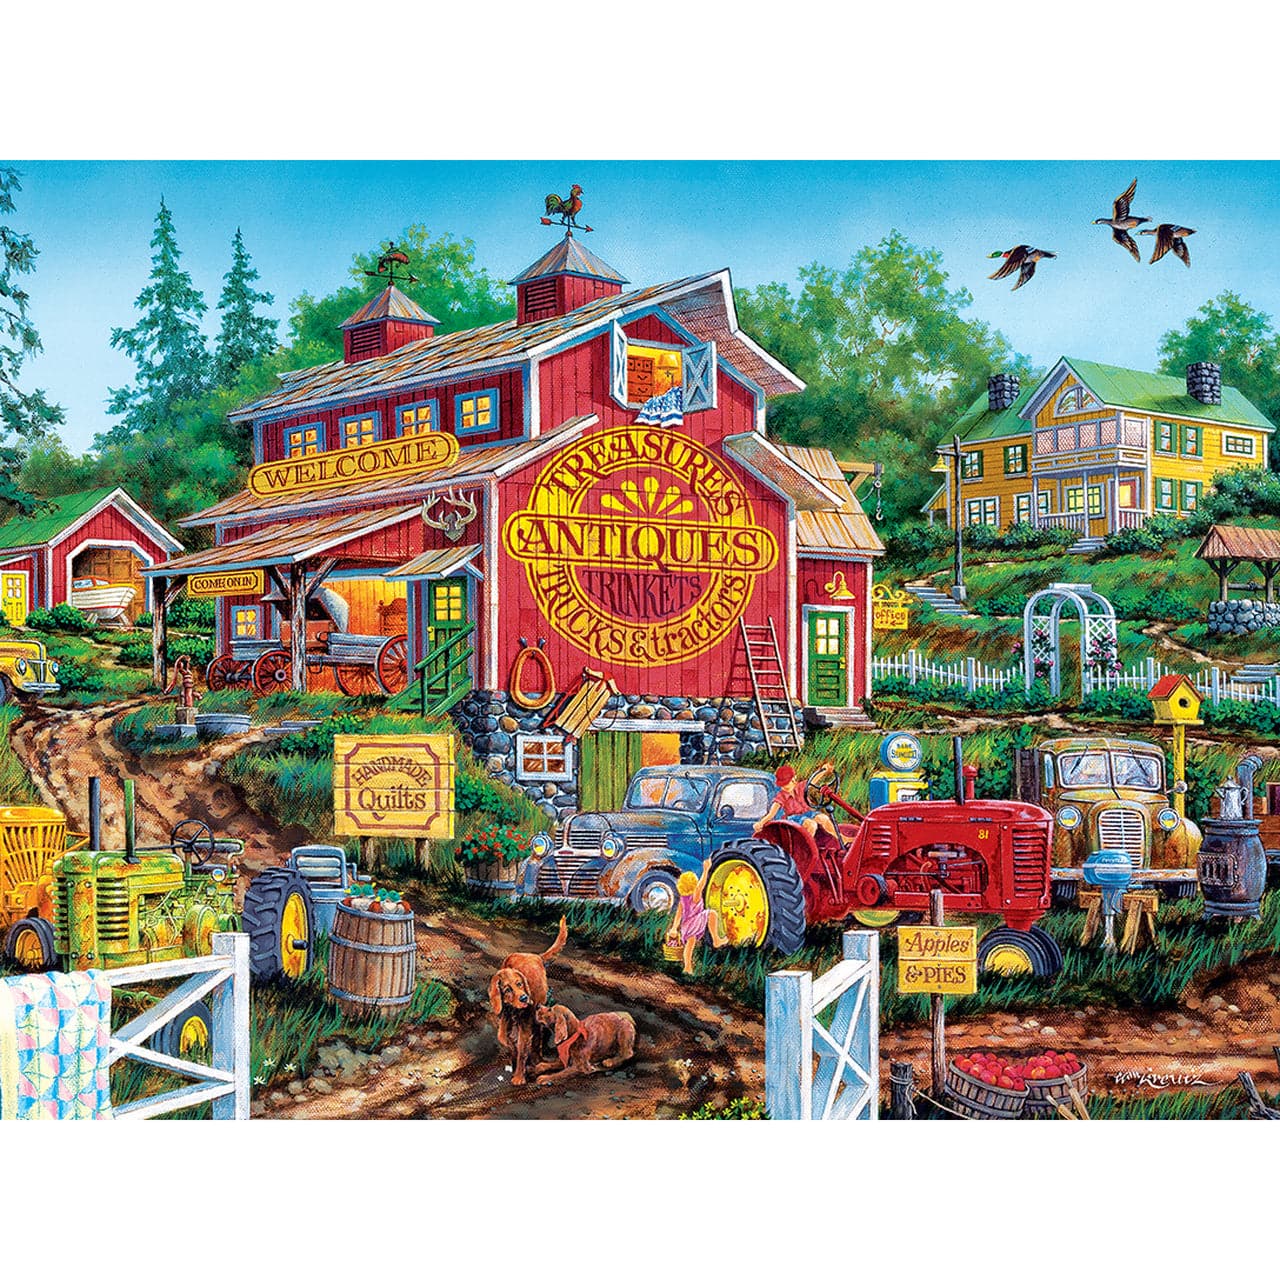 MasterPieces-Country Escapes - Antique Barn - 550 Piece Puzzle-31931-Legacy Toys